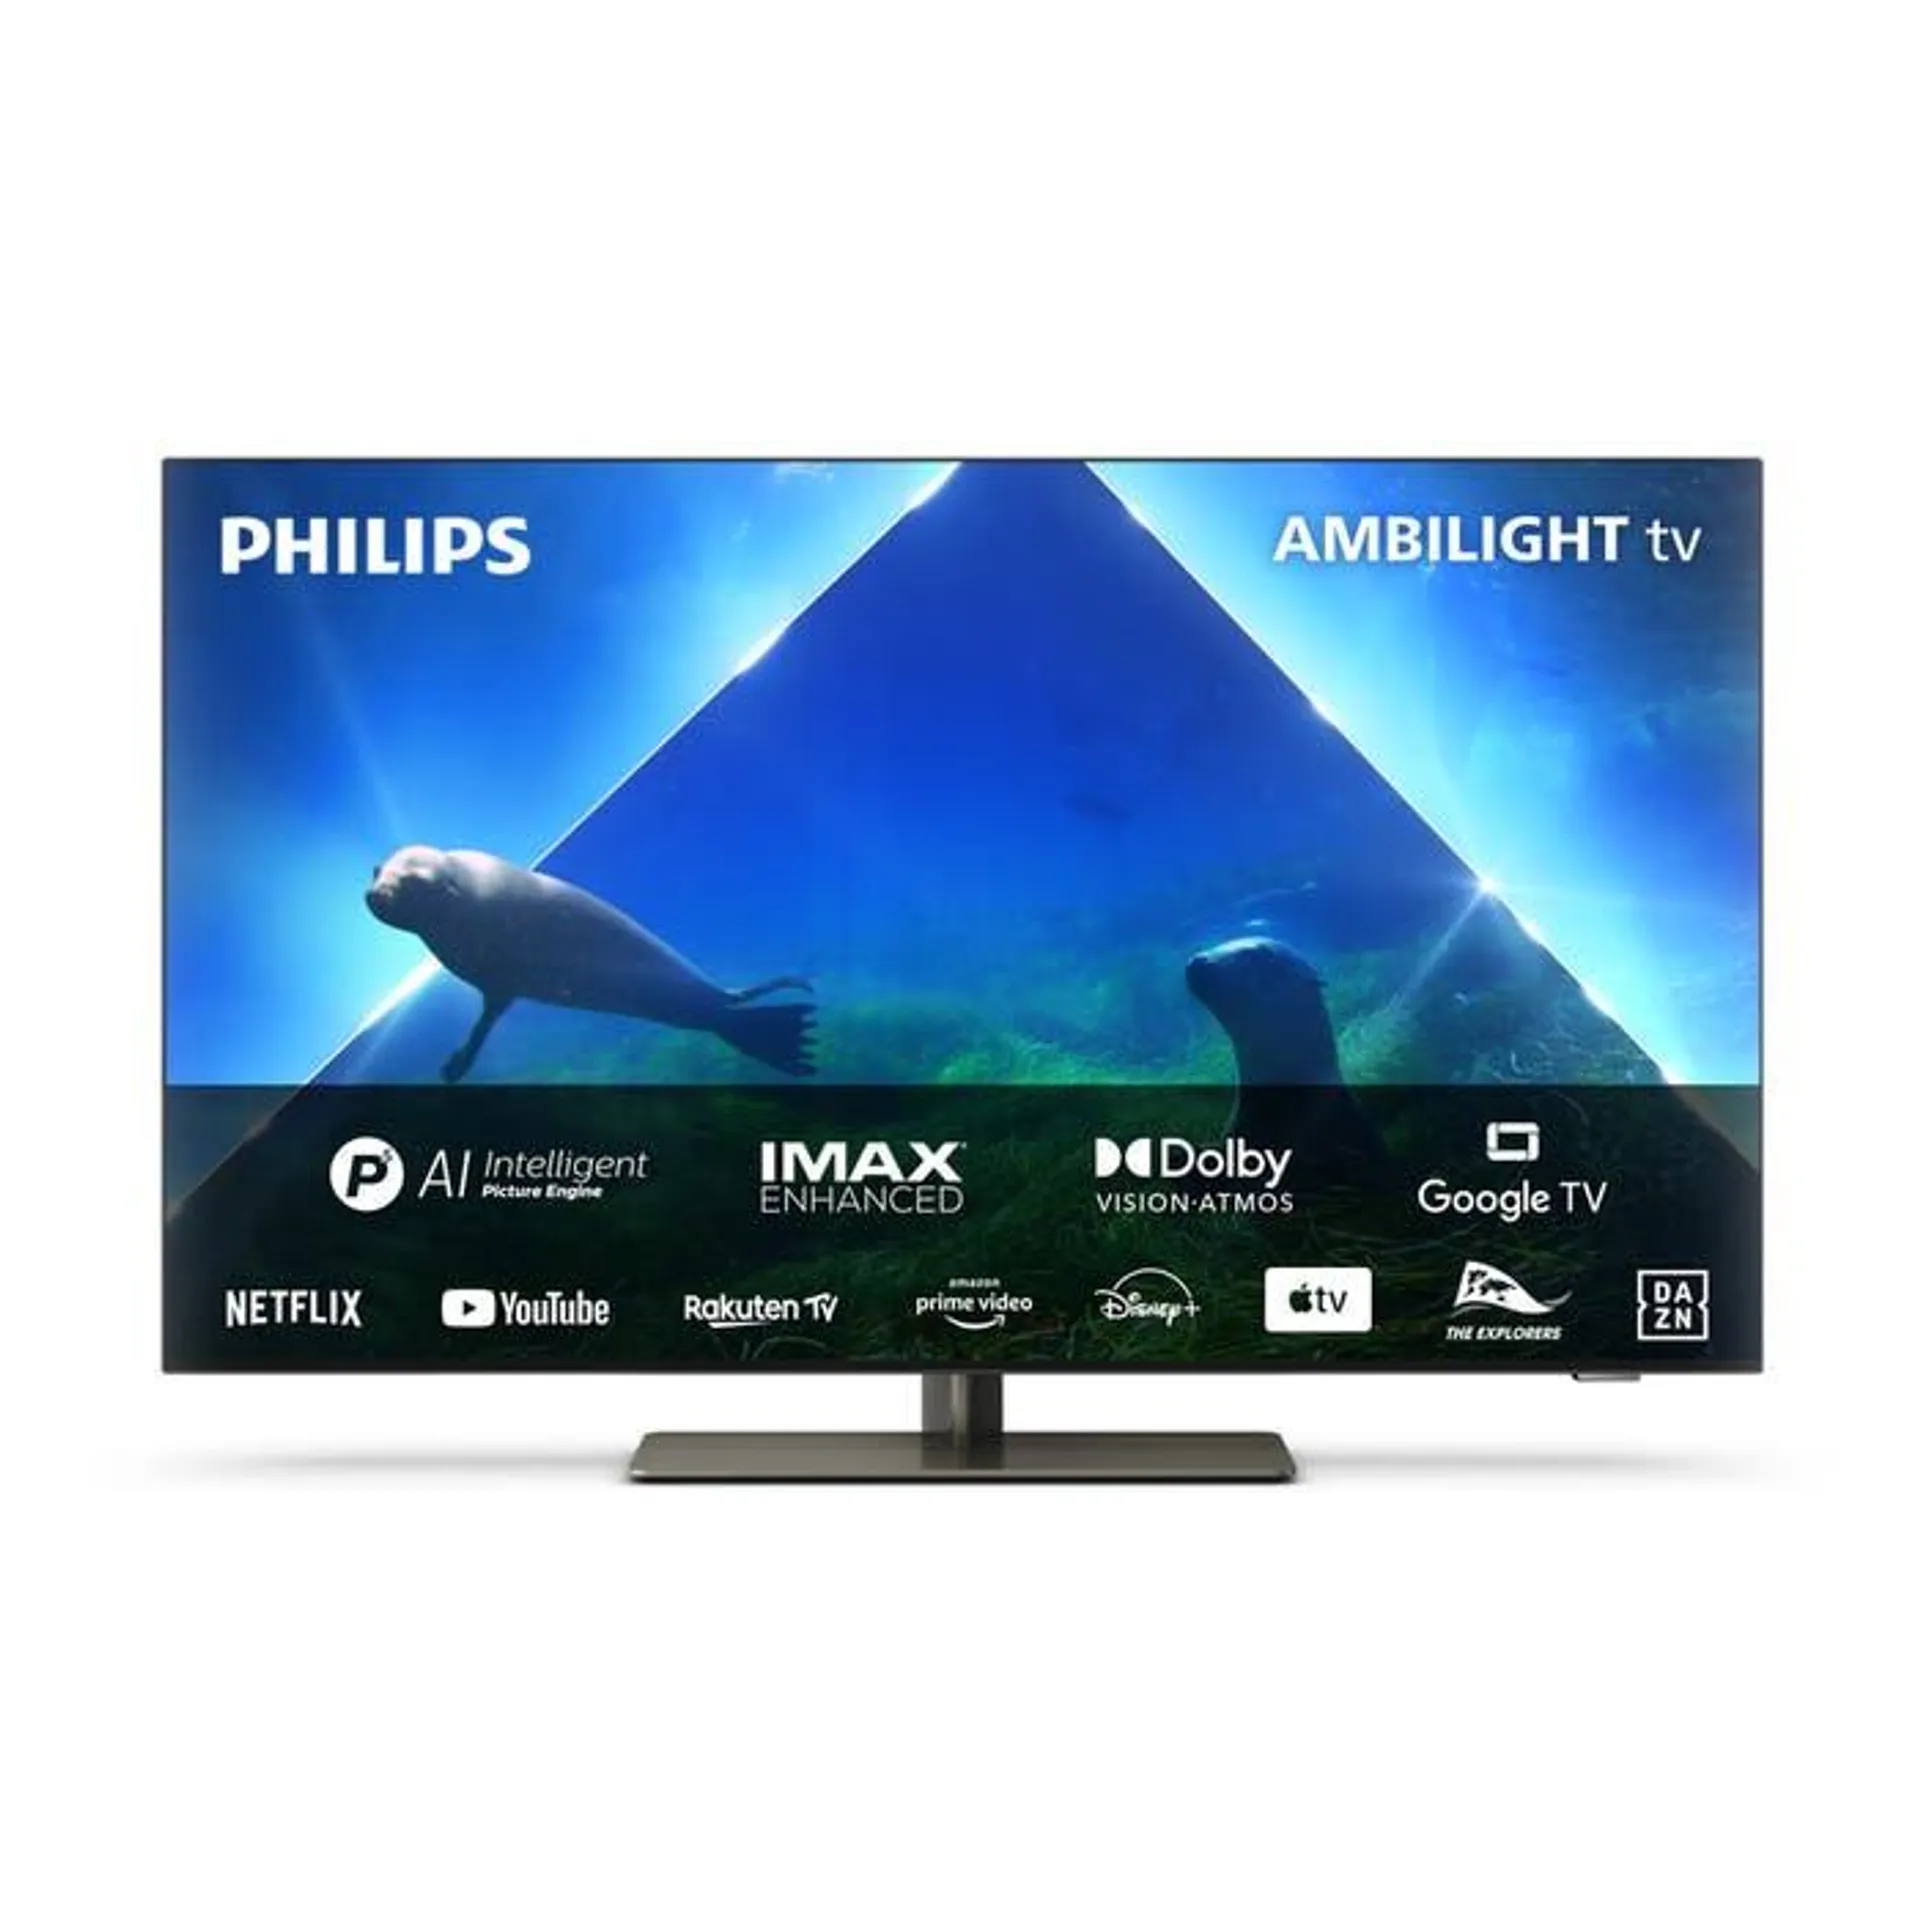 Philips 55OLED848/12 4K UHD AMBILIGHT TV